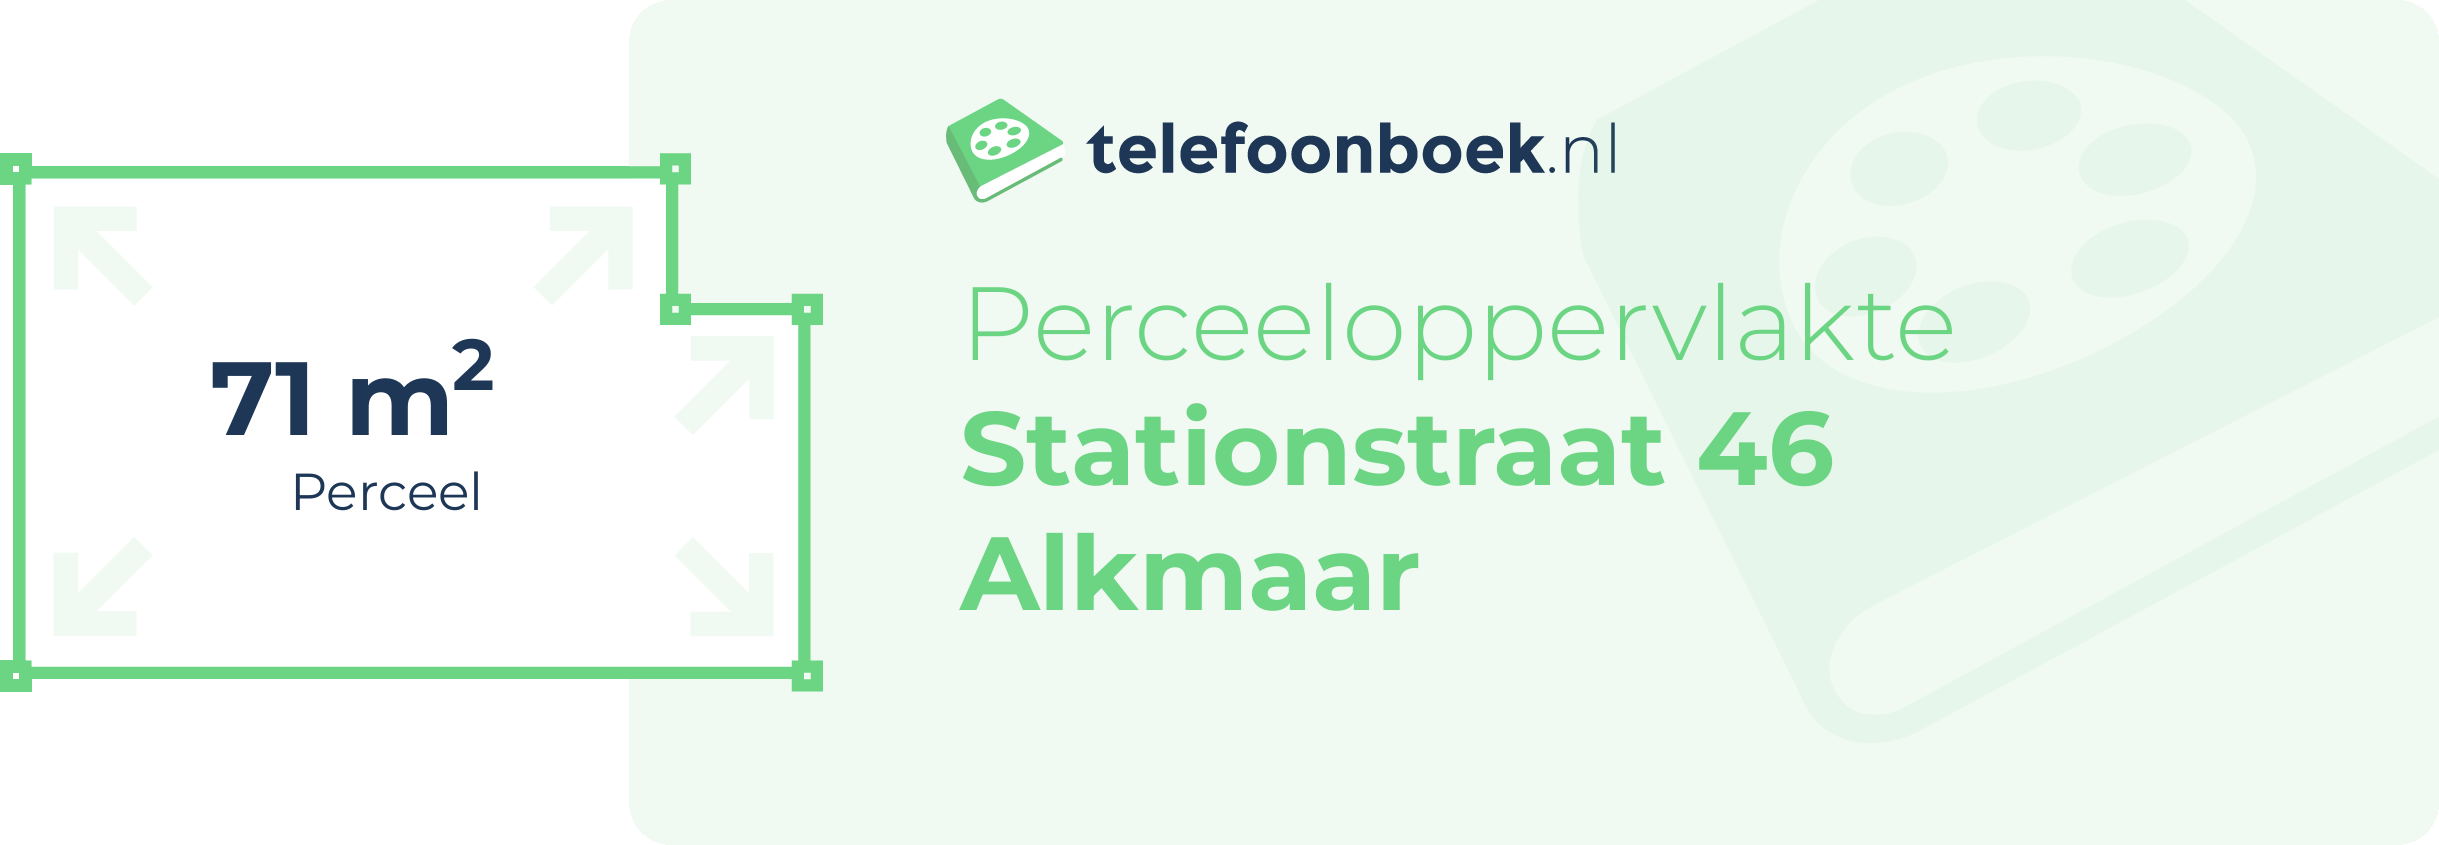 Perceeloppervlakte Stationstraat 46 Alkmaar